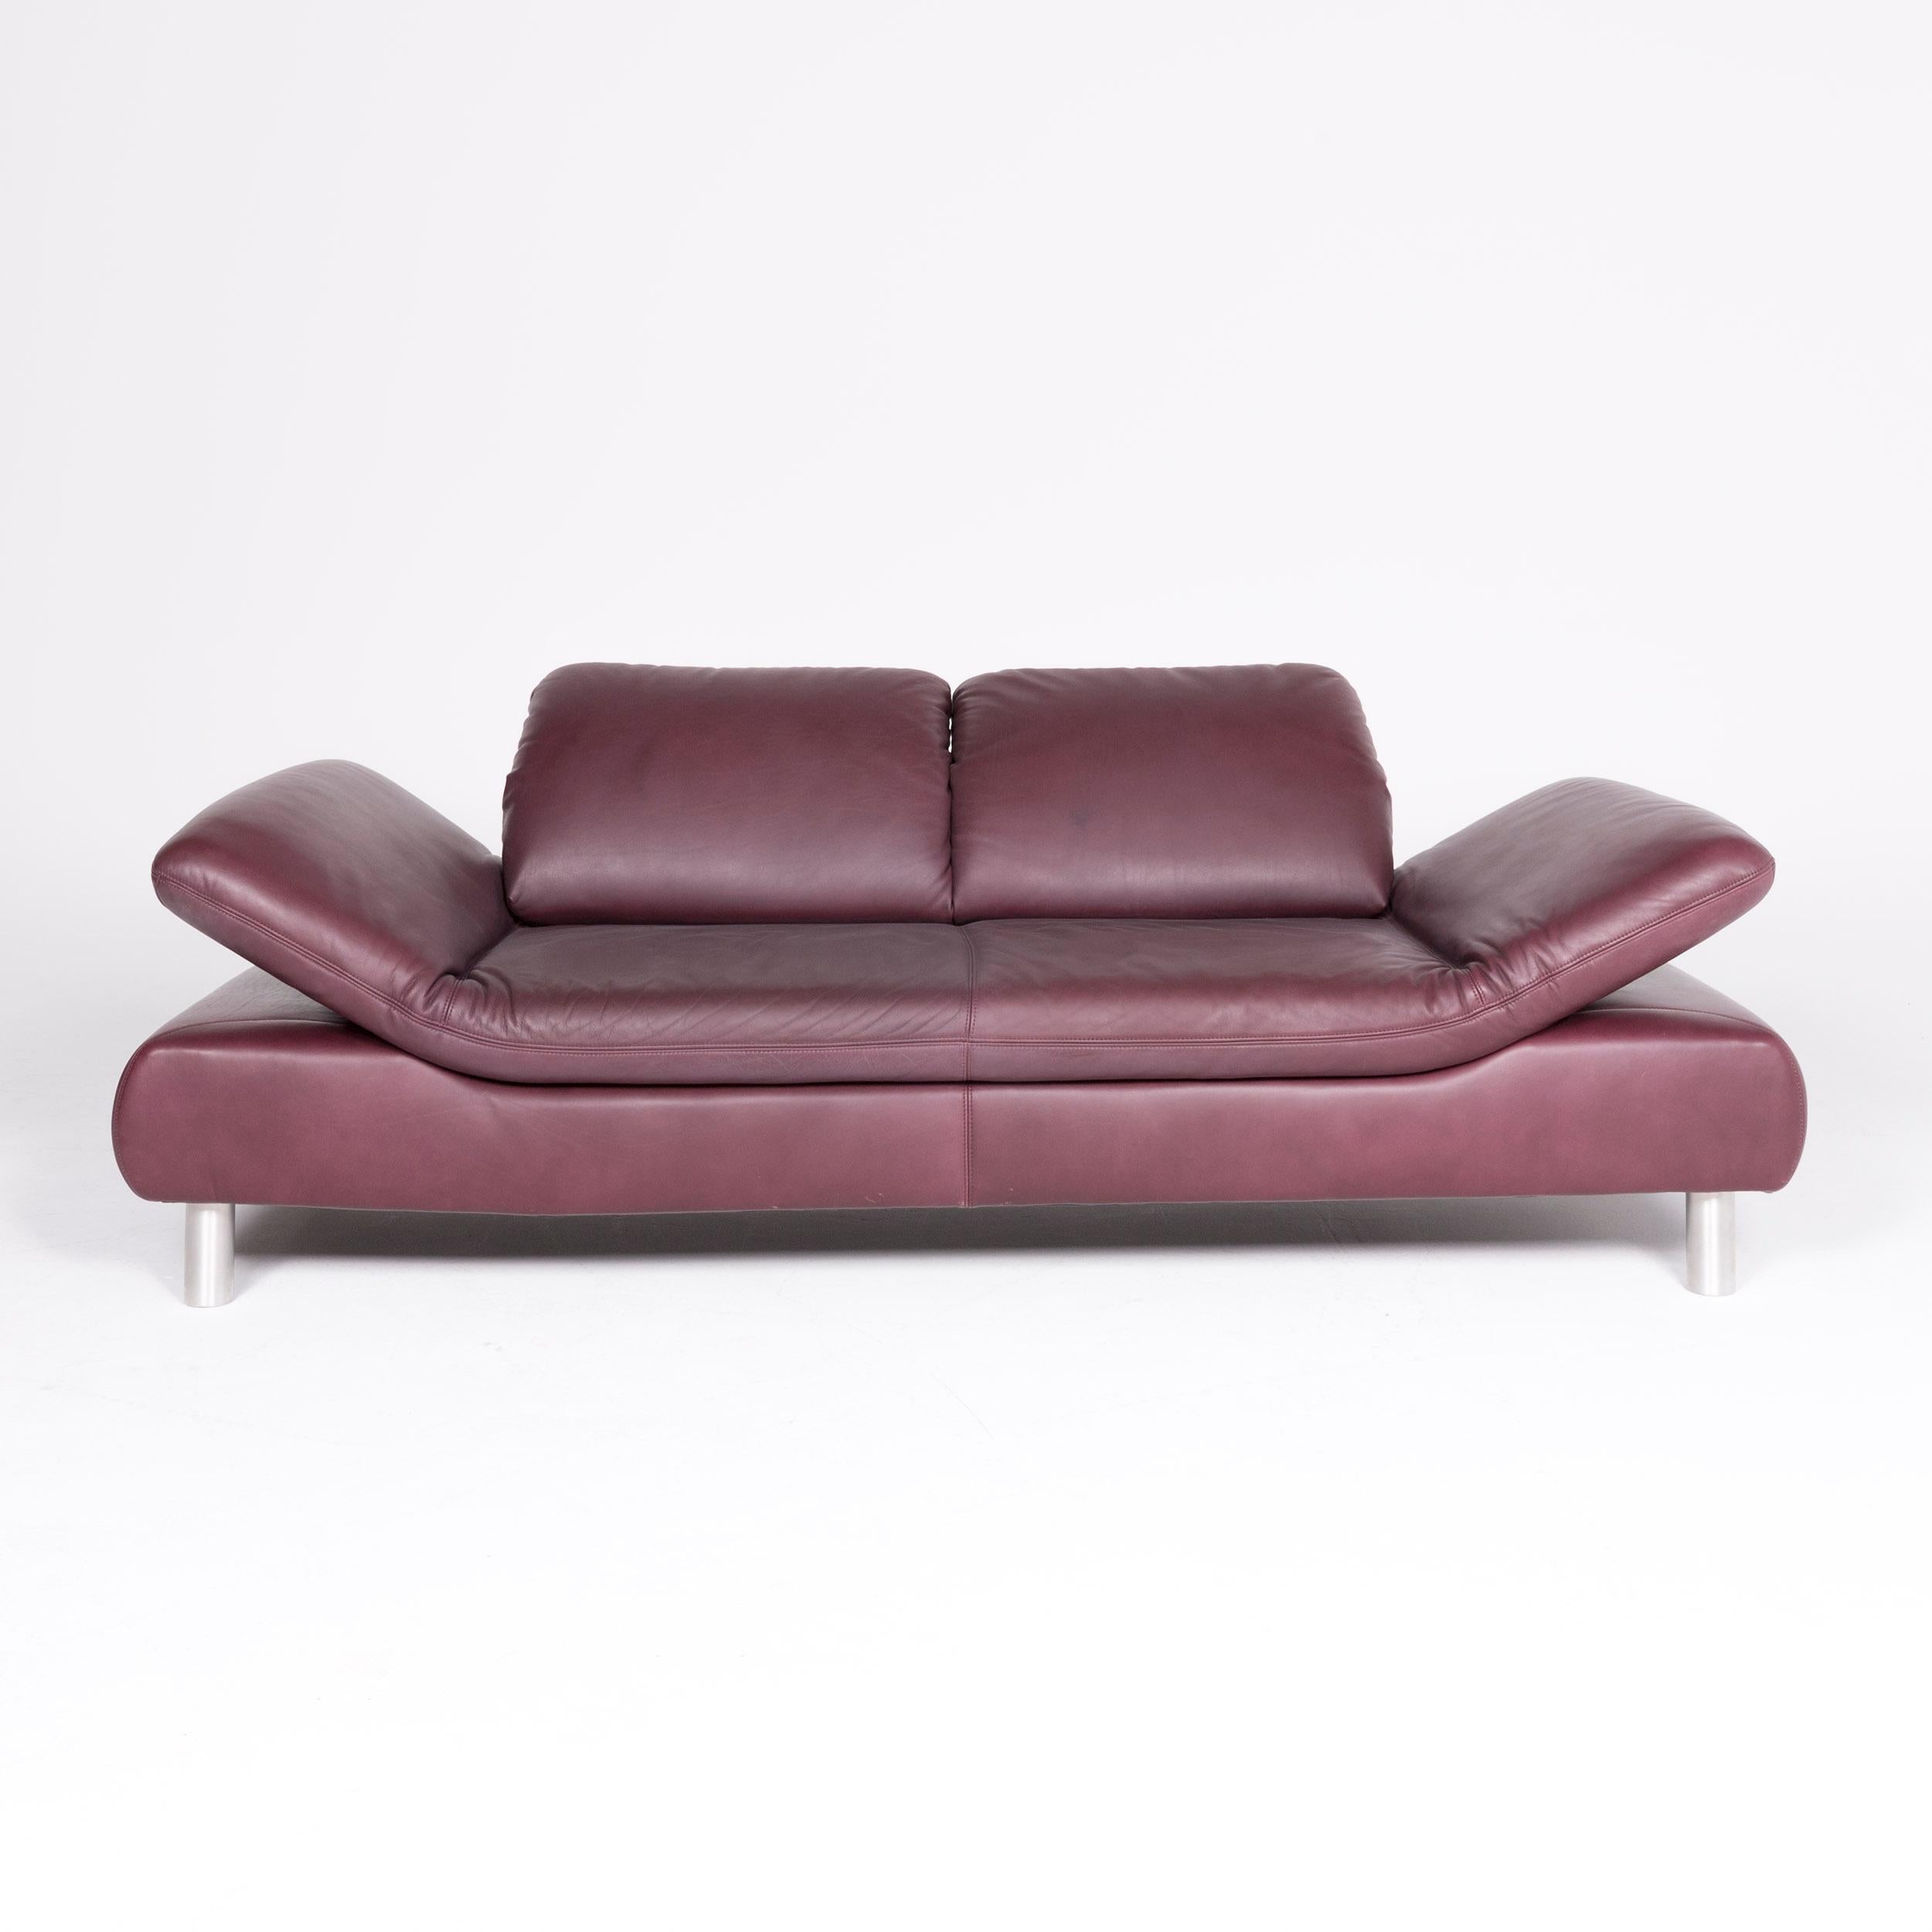 German Koinor Rivoli Designer Leather Sofa Purple Genuine Leather Two-Seat Couch For Sale